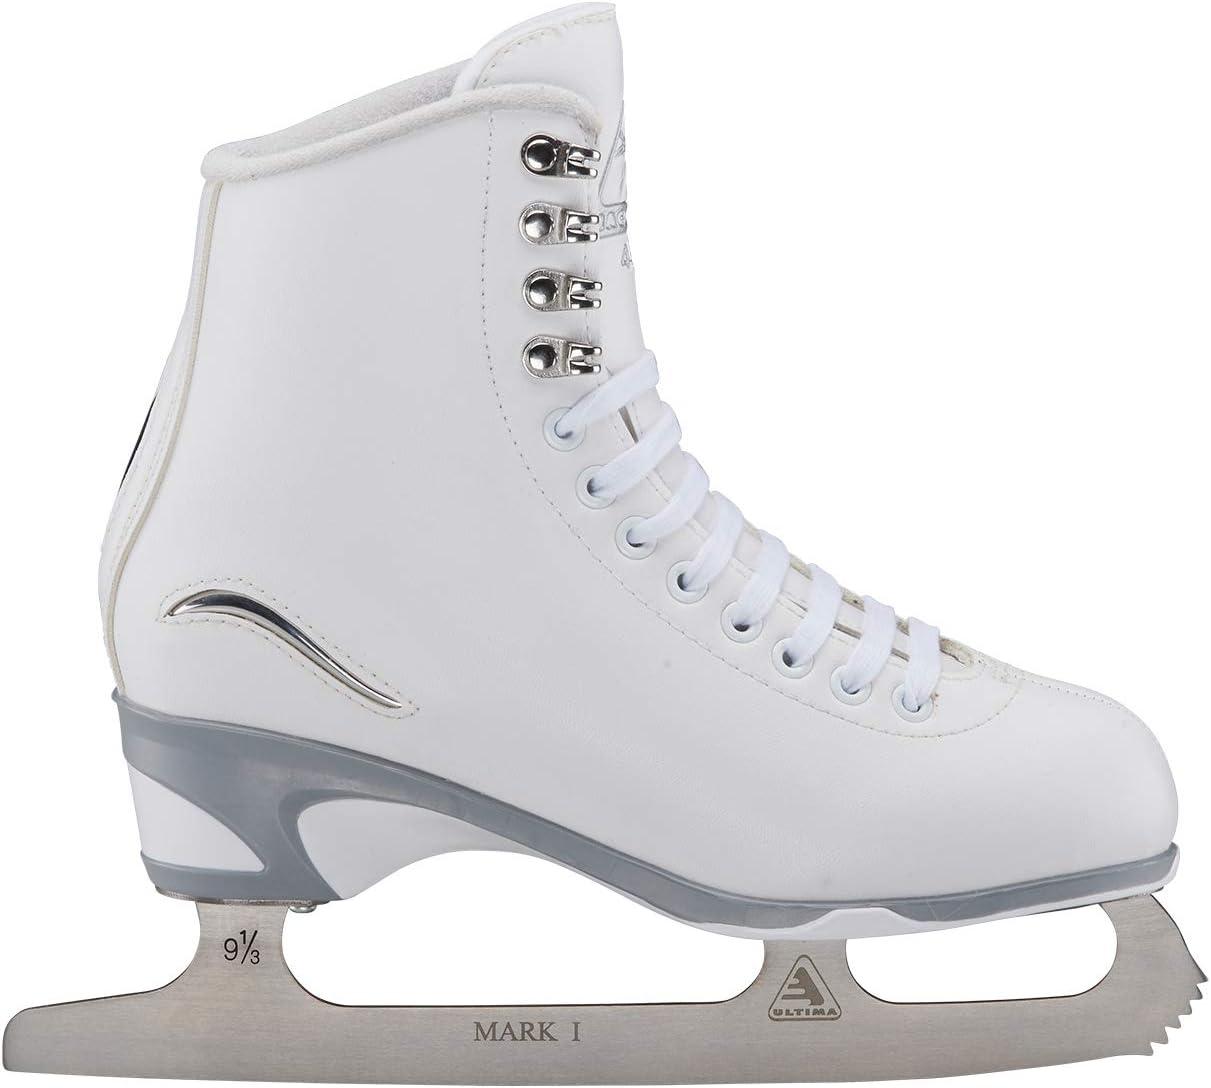 Custom – Jackson Ultima Skates